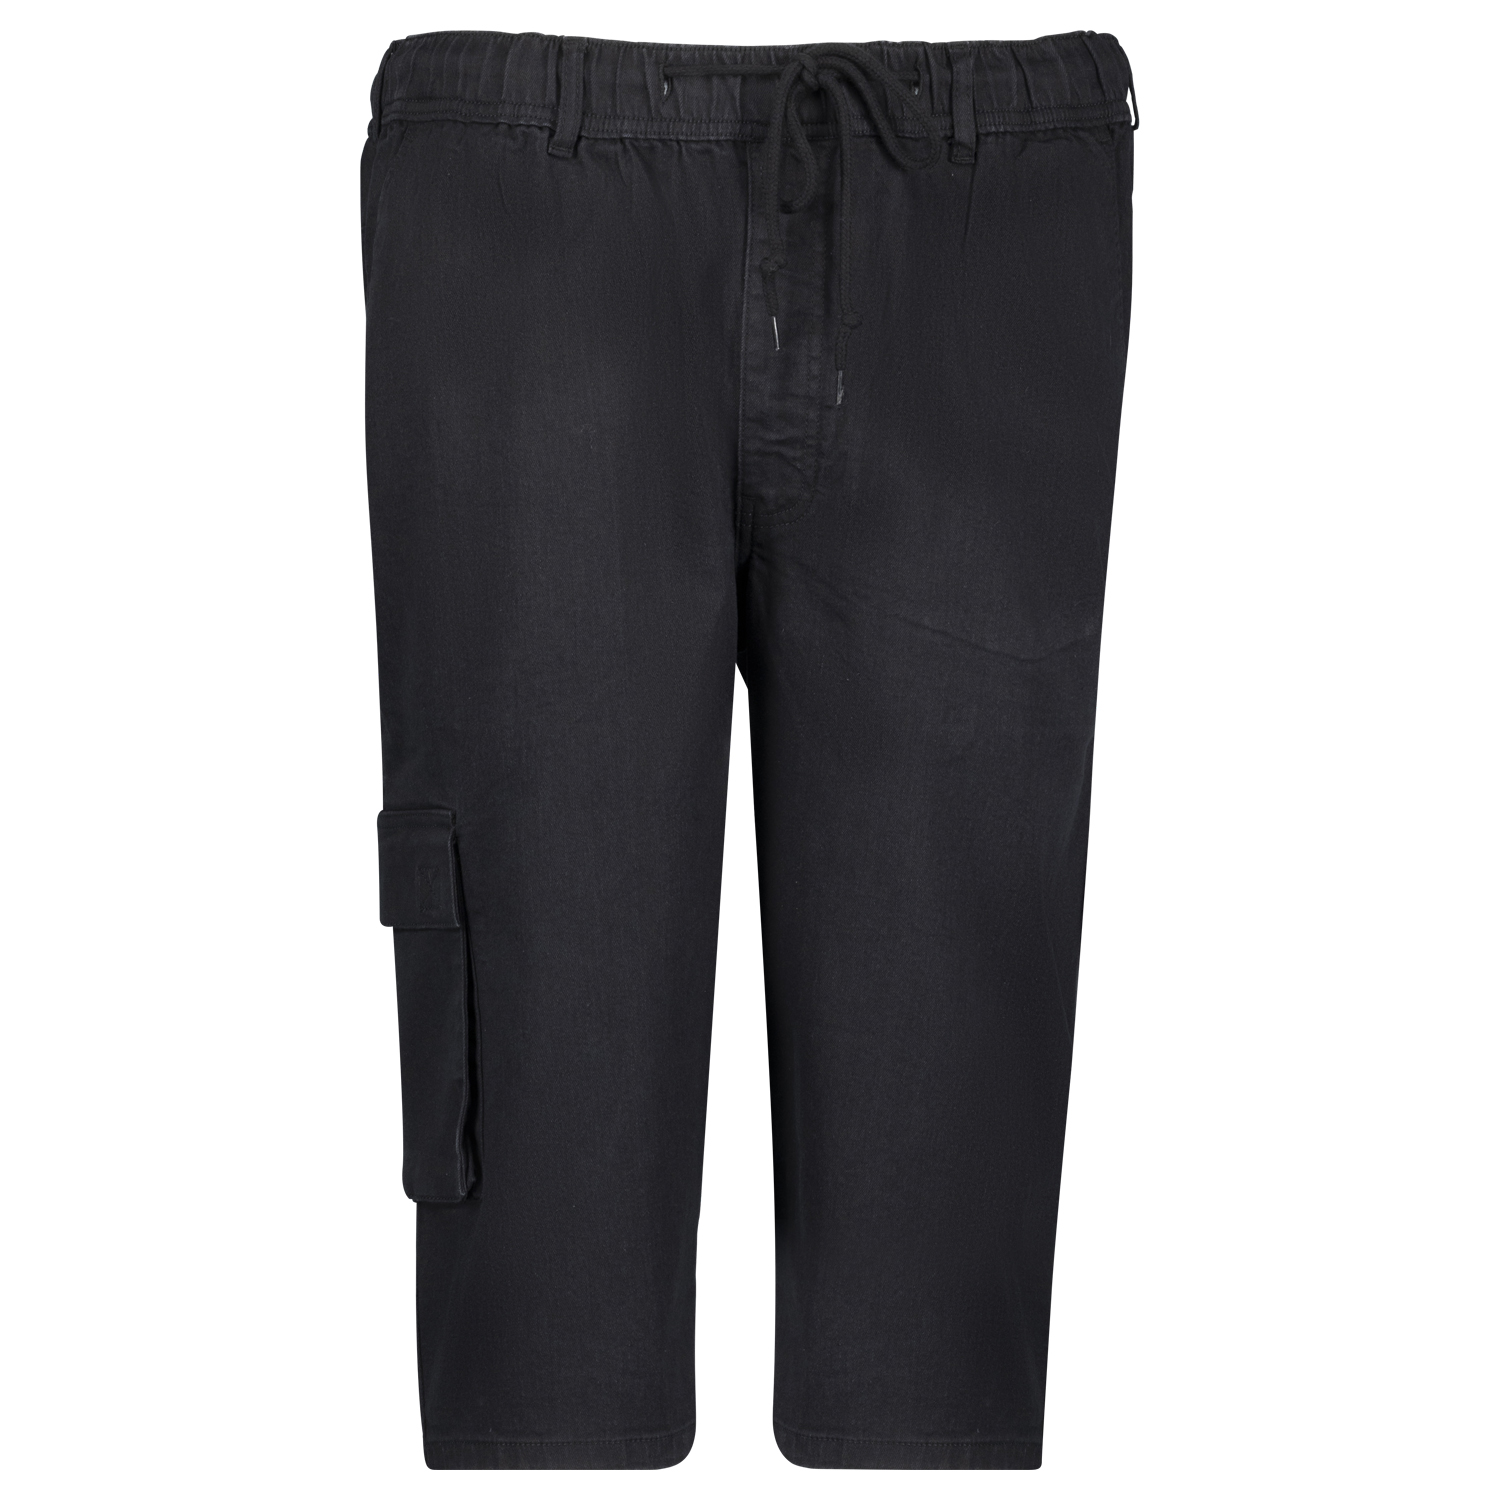 Jeans sweatpants capri in black for men by Adamo series "Dallas" in oversizes up to 12XL